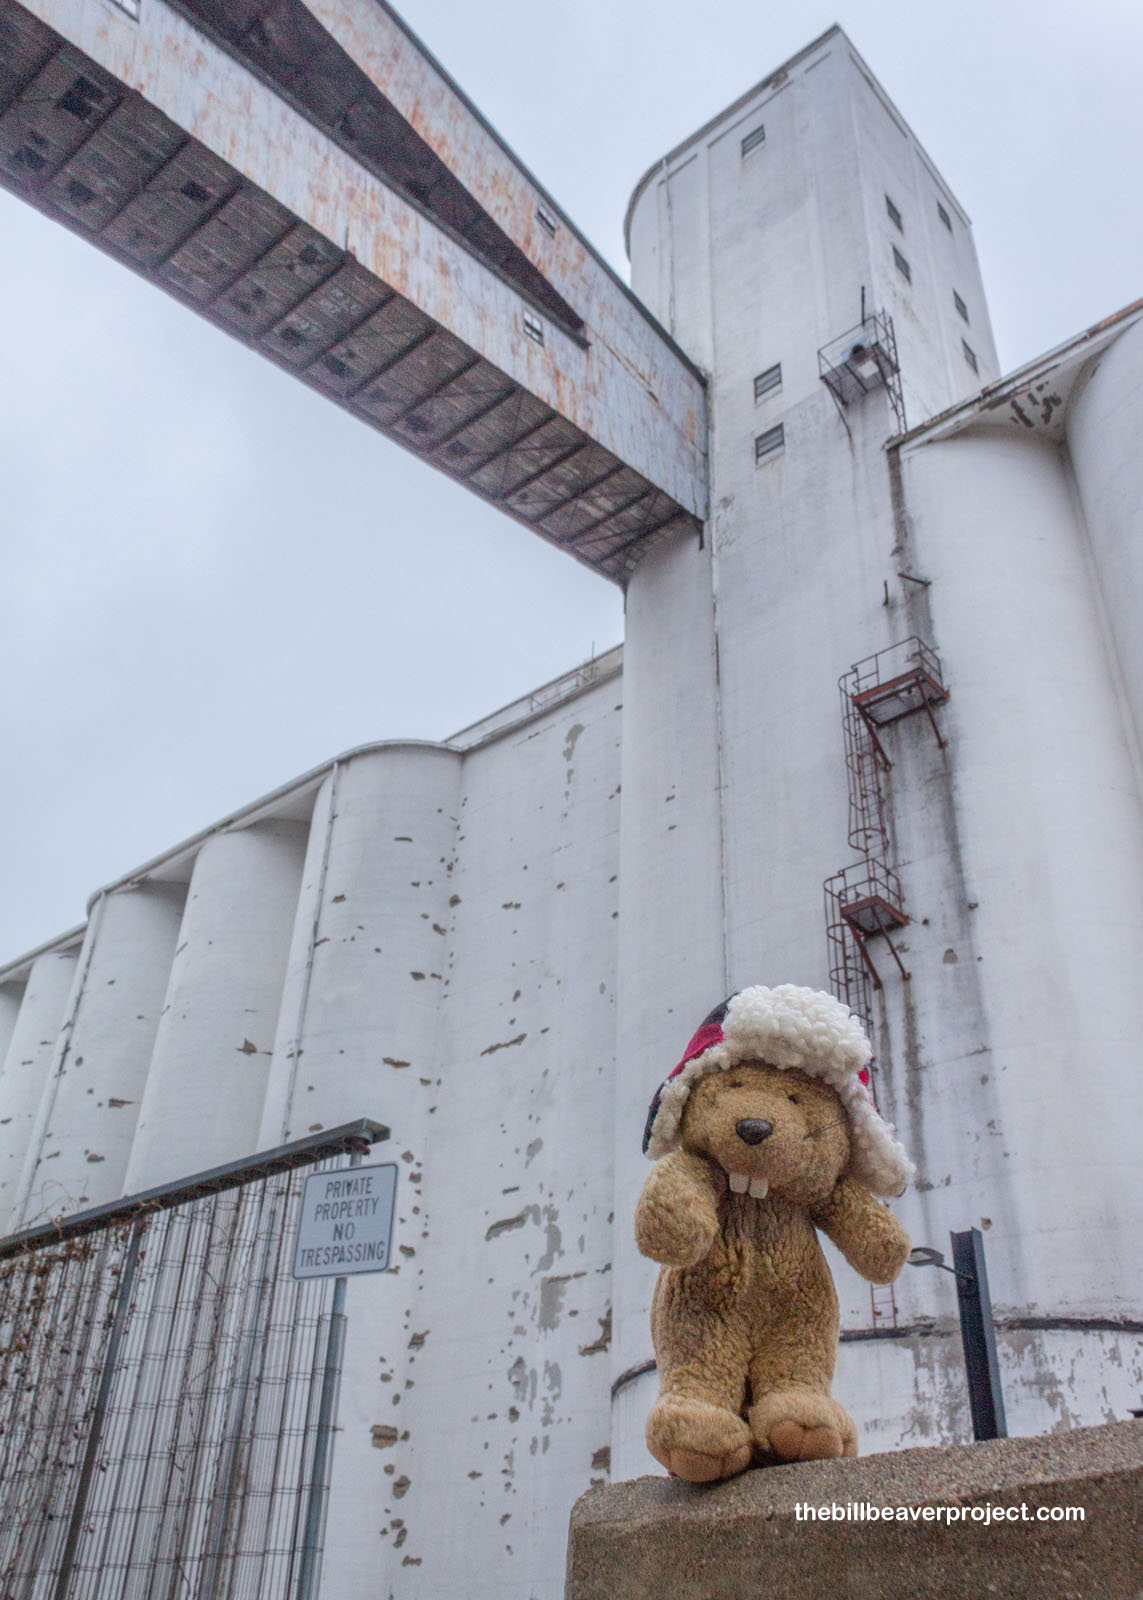 The mill's grain elevator is still intact!